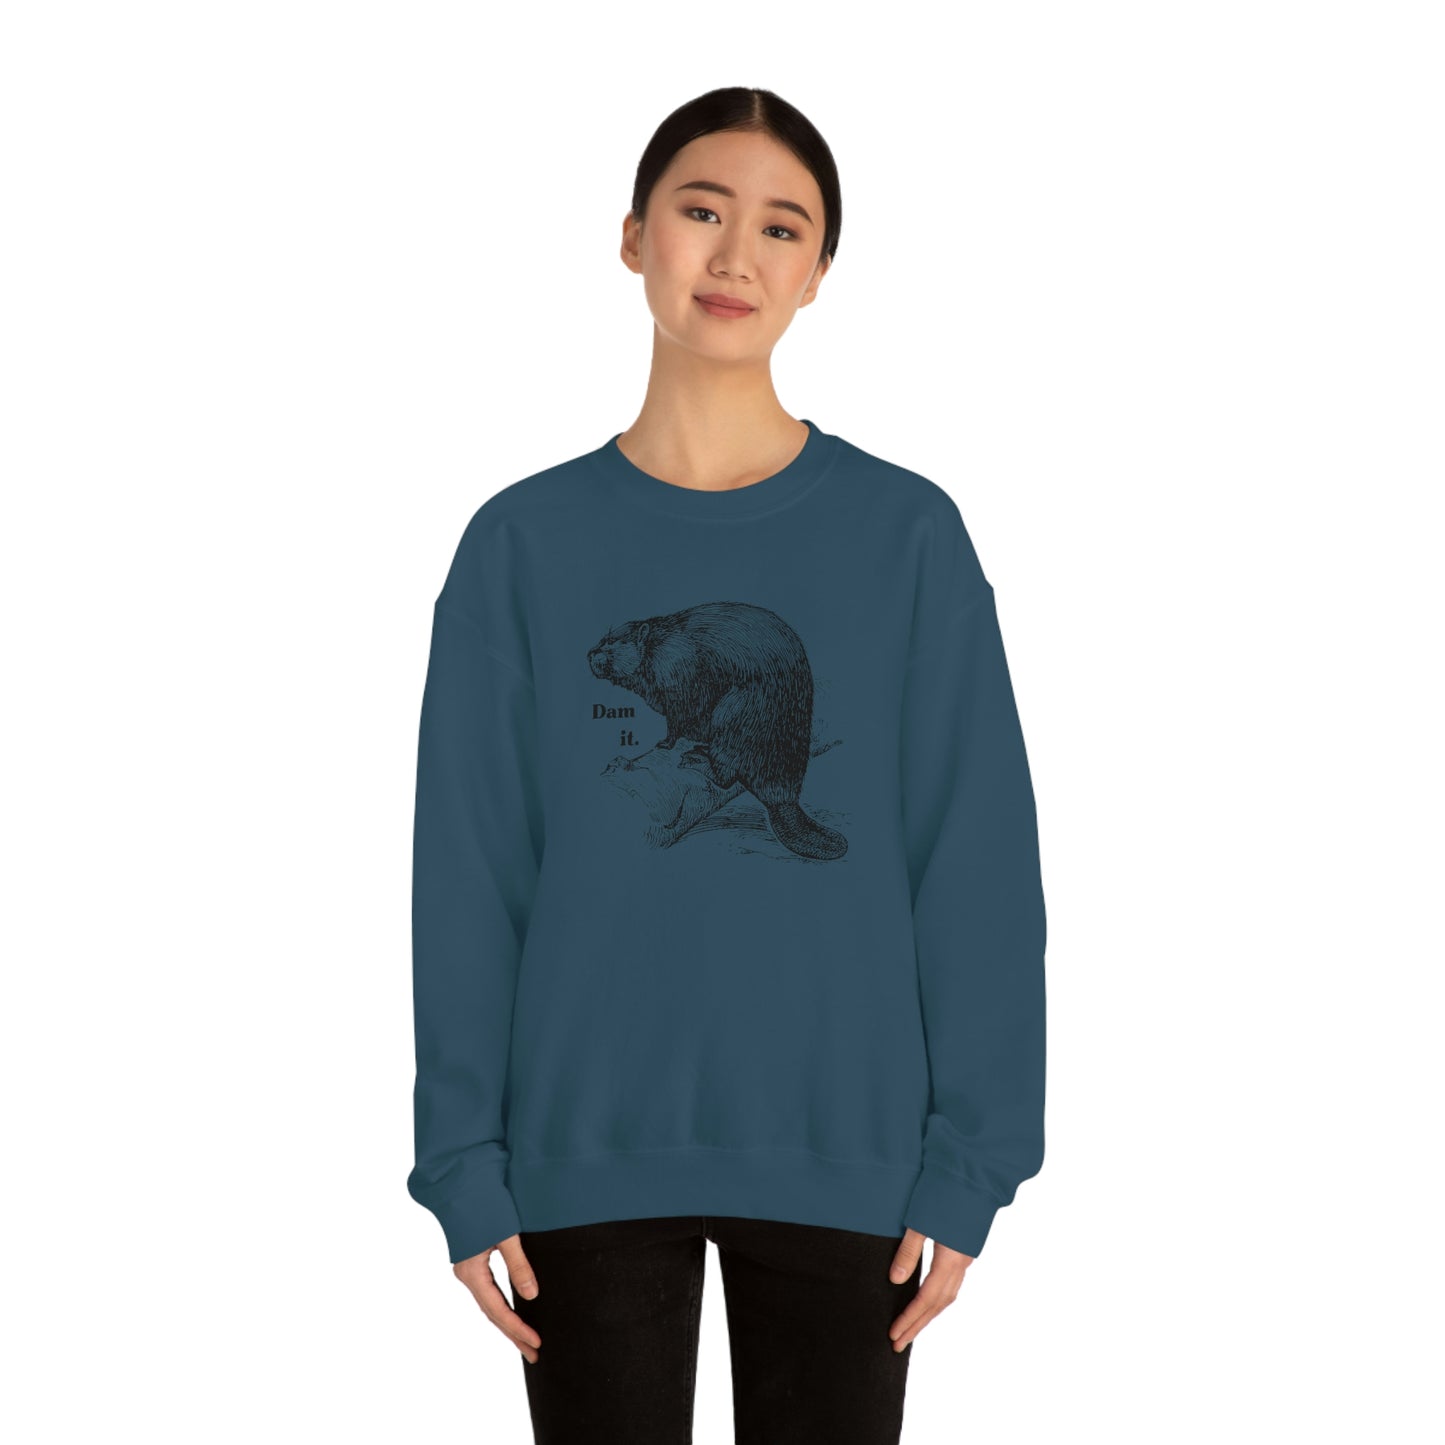 "Dam it" Gildan Graphic Crewneck Sweatshirt